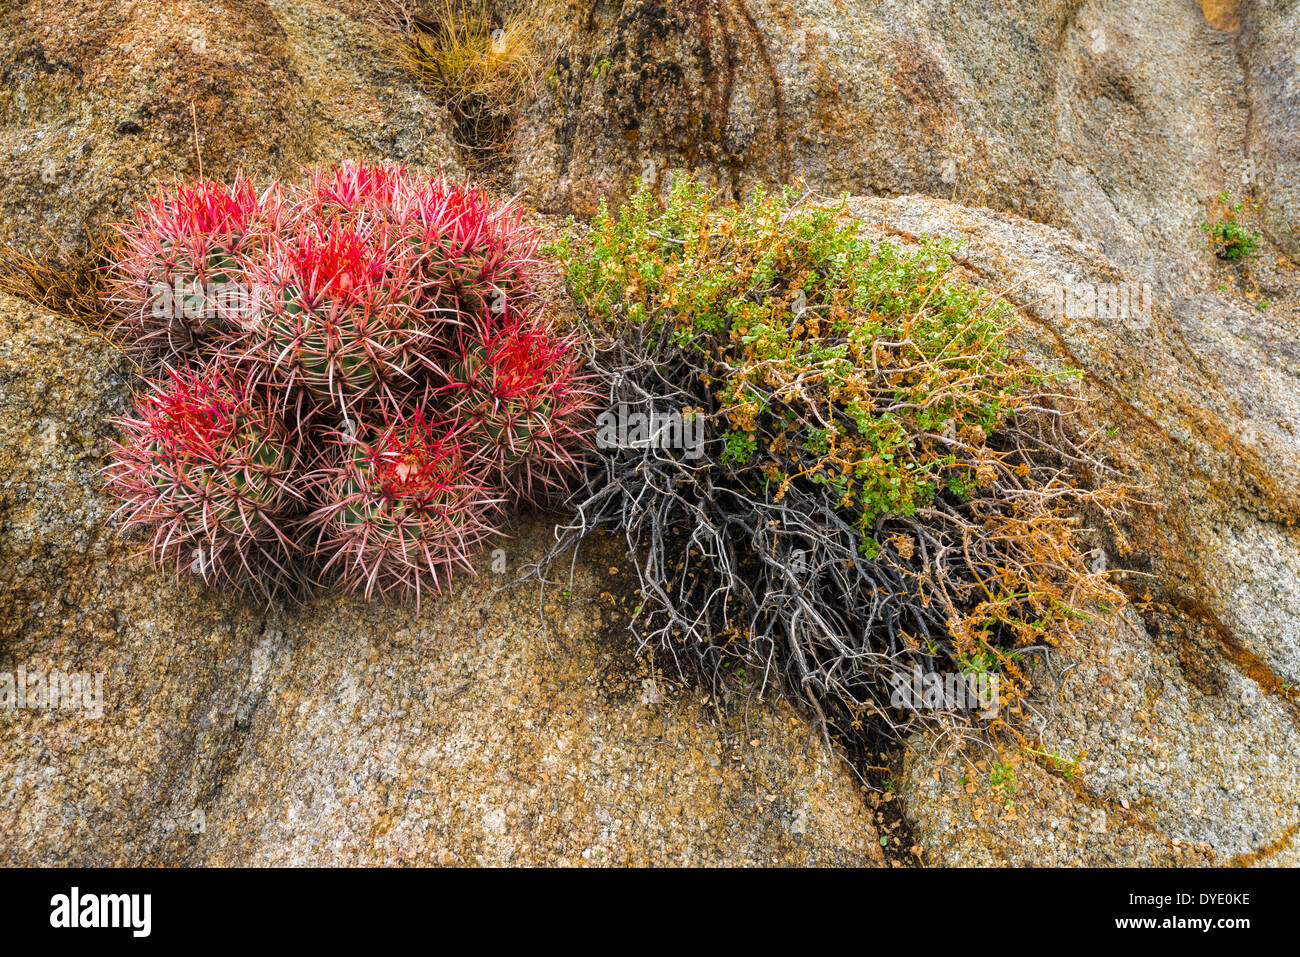 Barrel cactus in the Alabama Hills, Owen's Valley, California USA Stock Photo